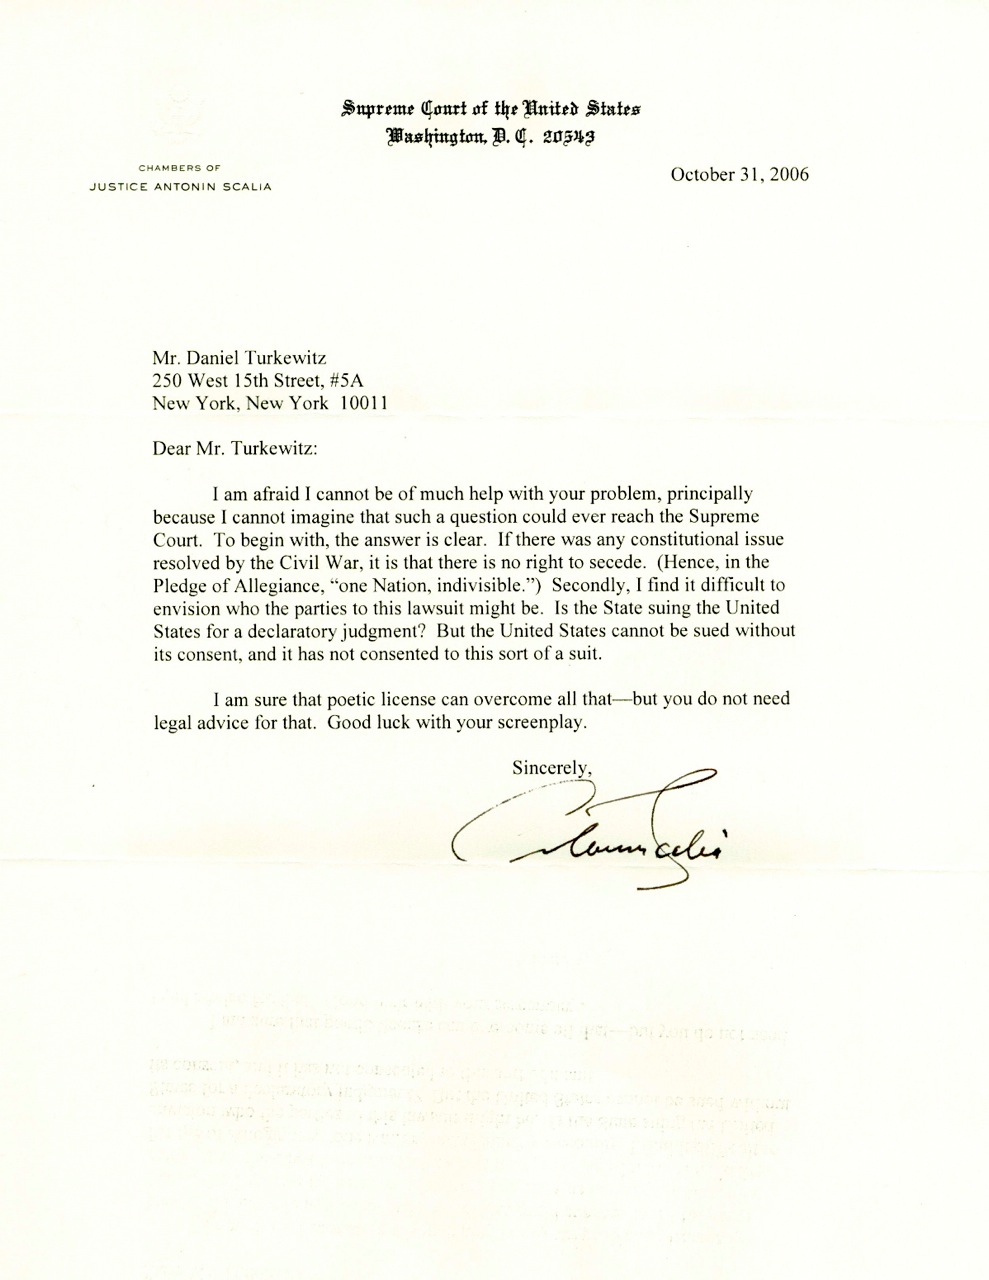 Scalia-Turkewitz-Letter-763174.jpg